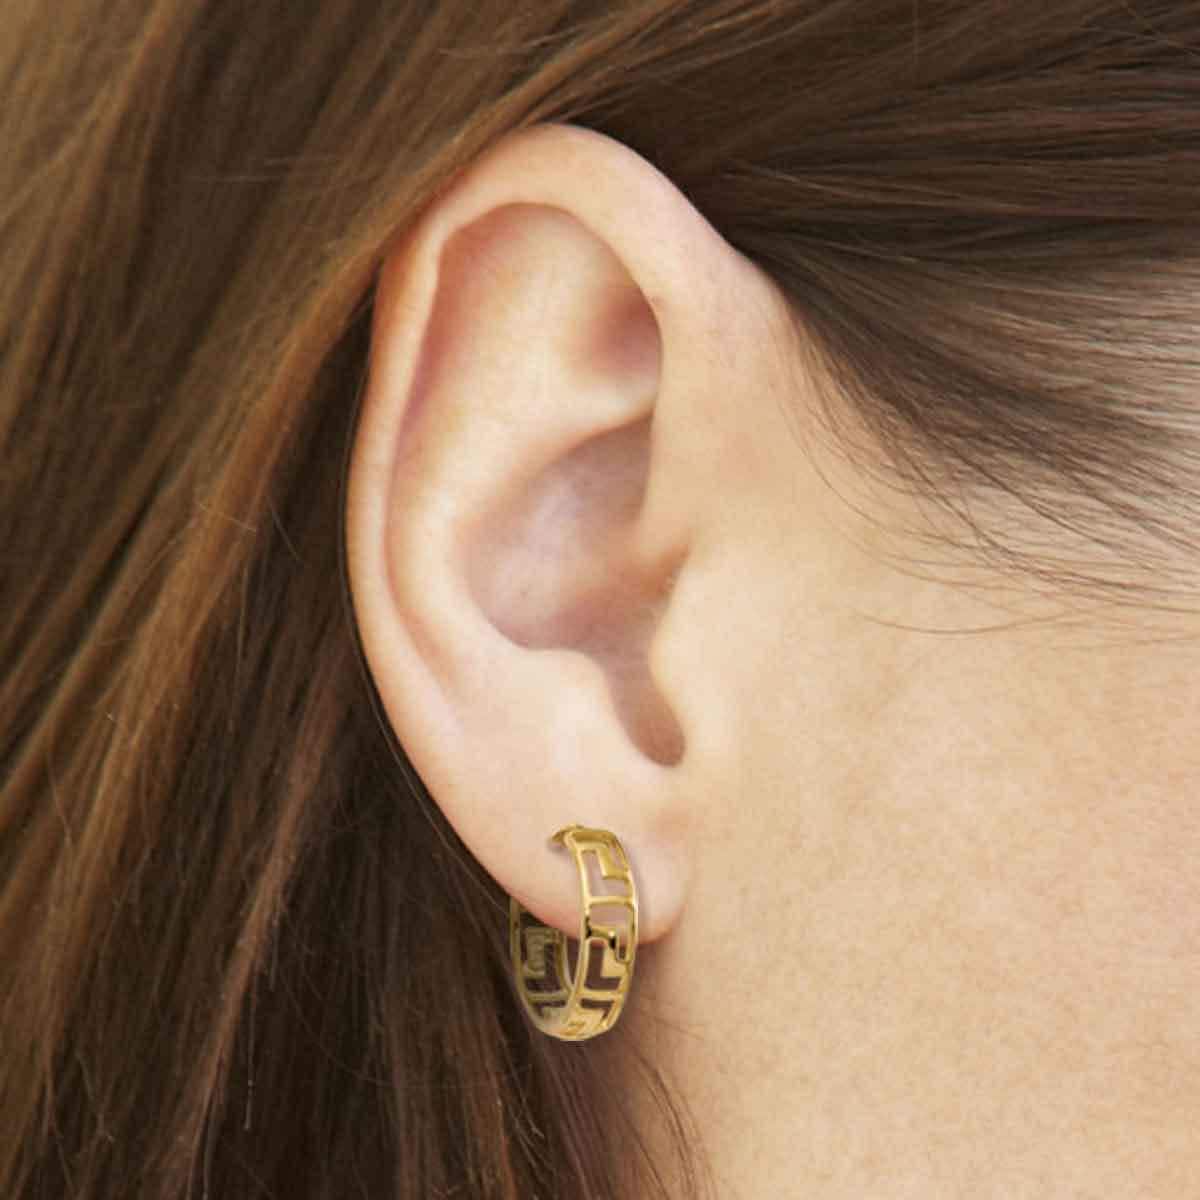 23 Millimeters 14k Yellow Gold 2 Millimeters Small Greek Pattern Hoop Earrings 0.8 Inches